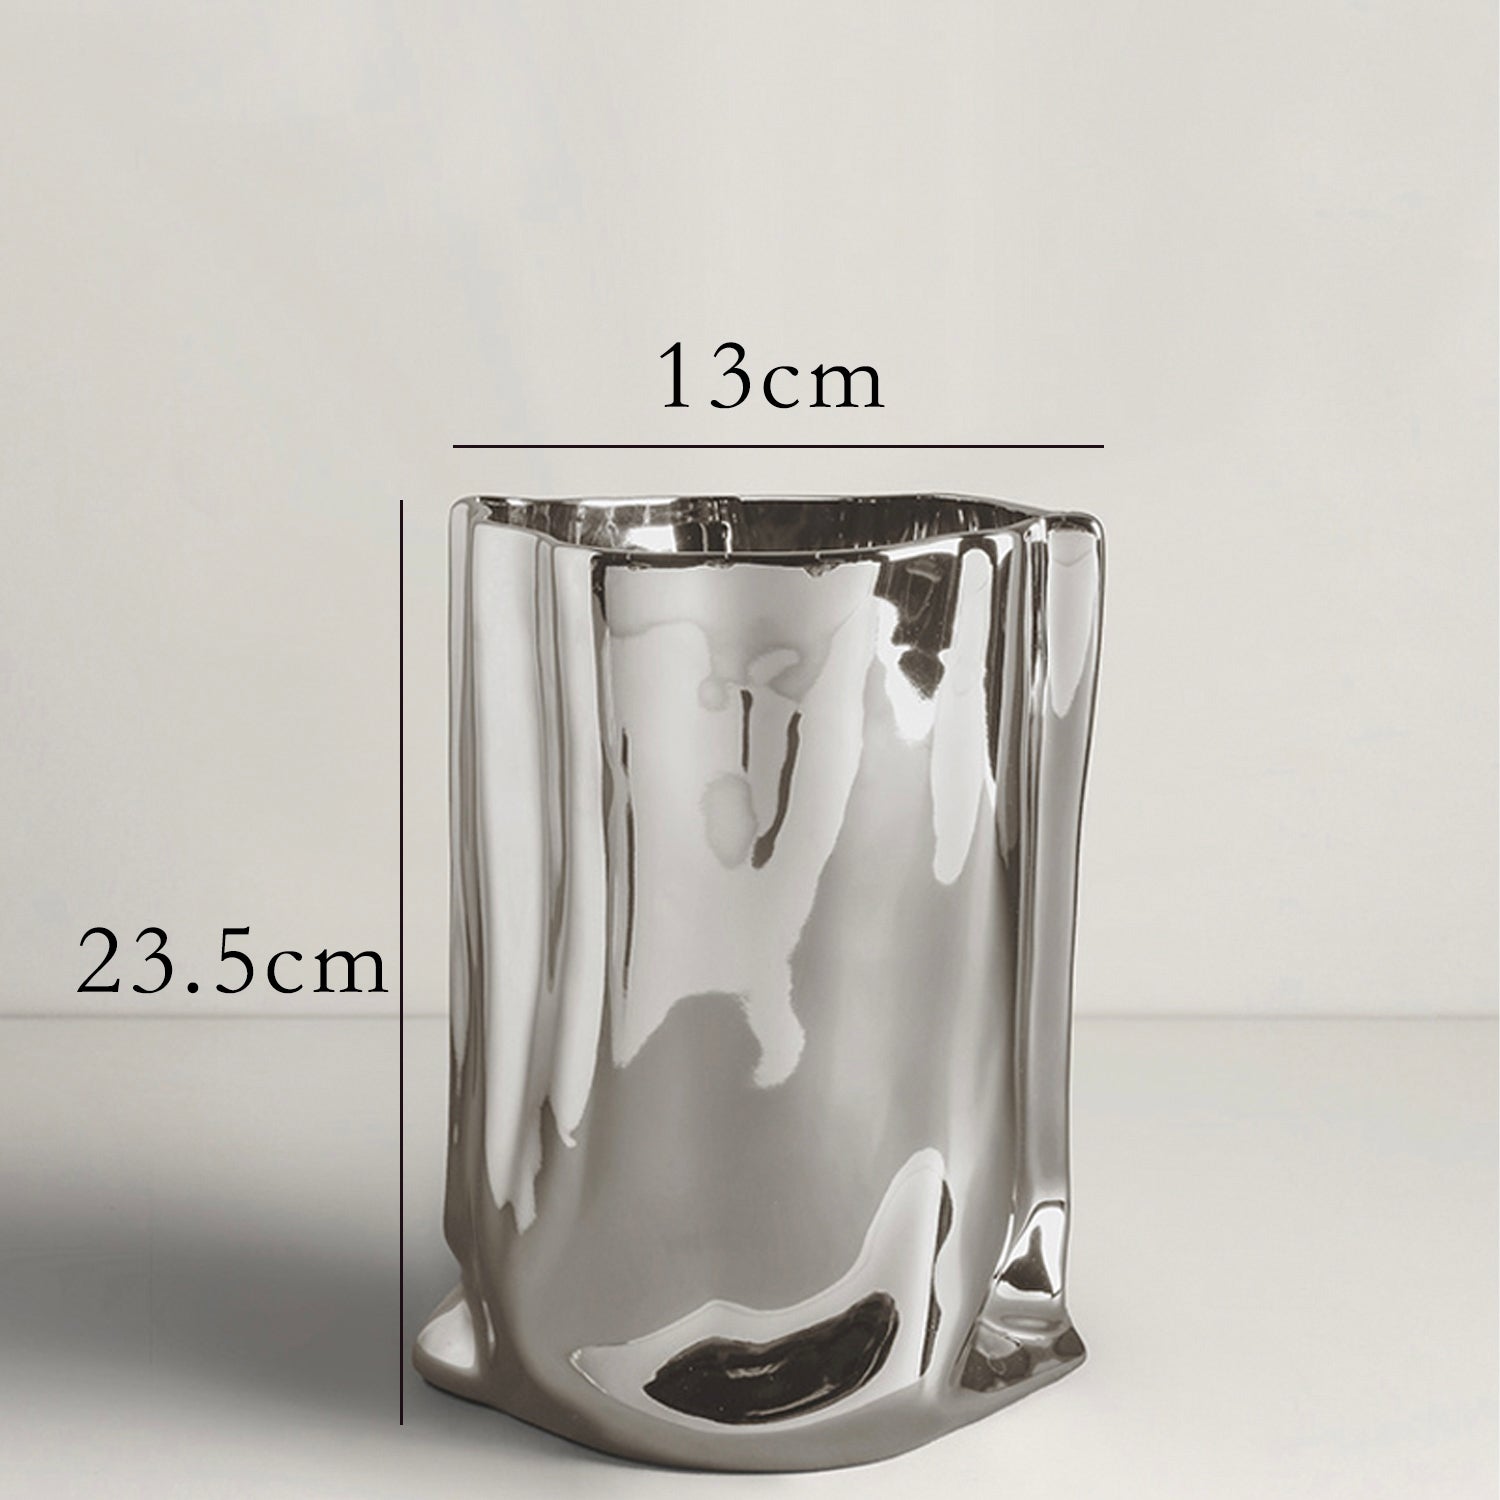 georg jensen silver ceramic glass vase lego flowers vase modern minimal home decorations